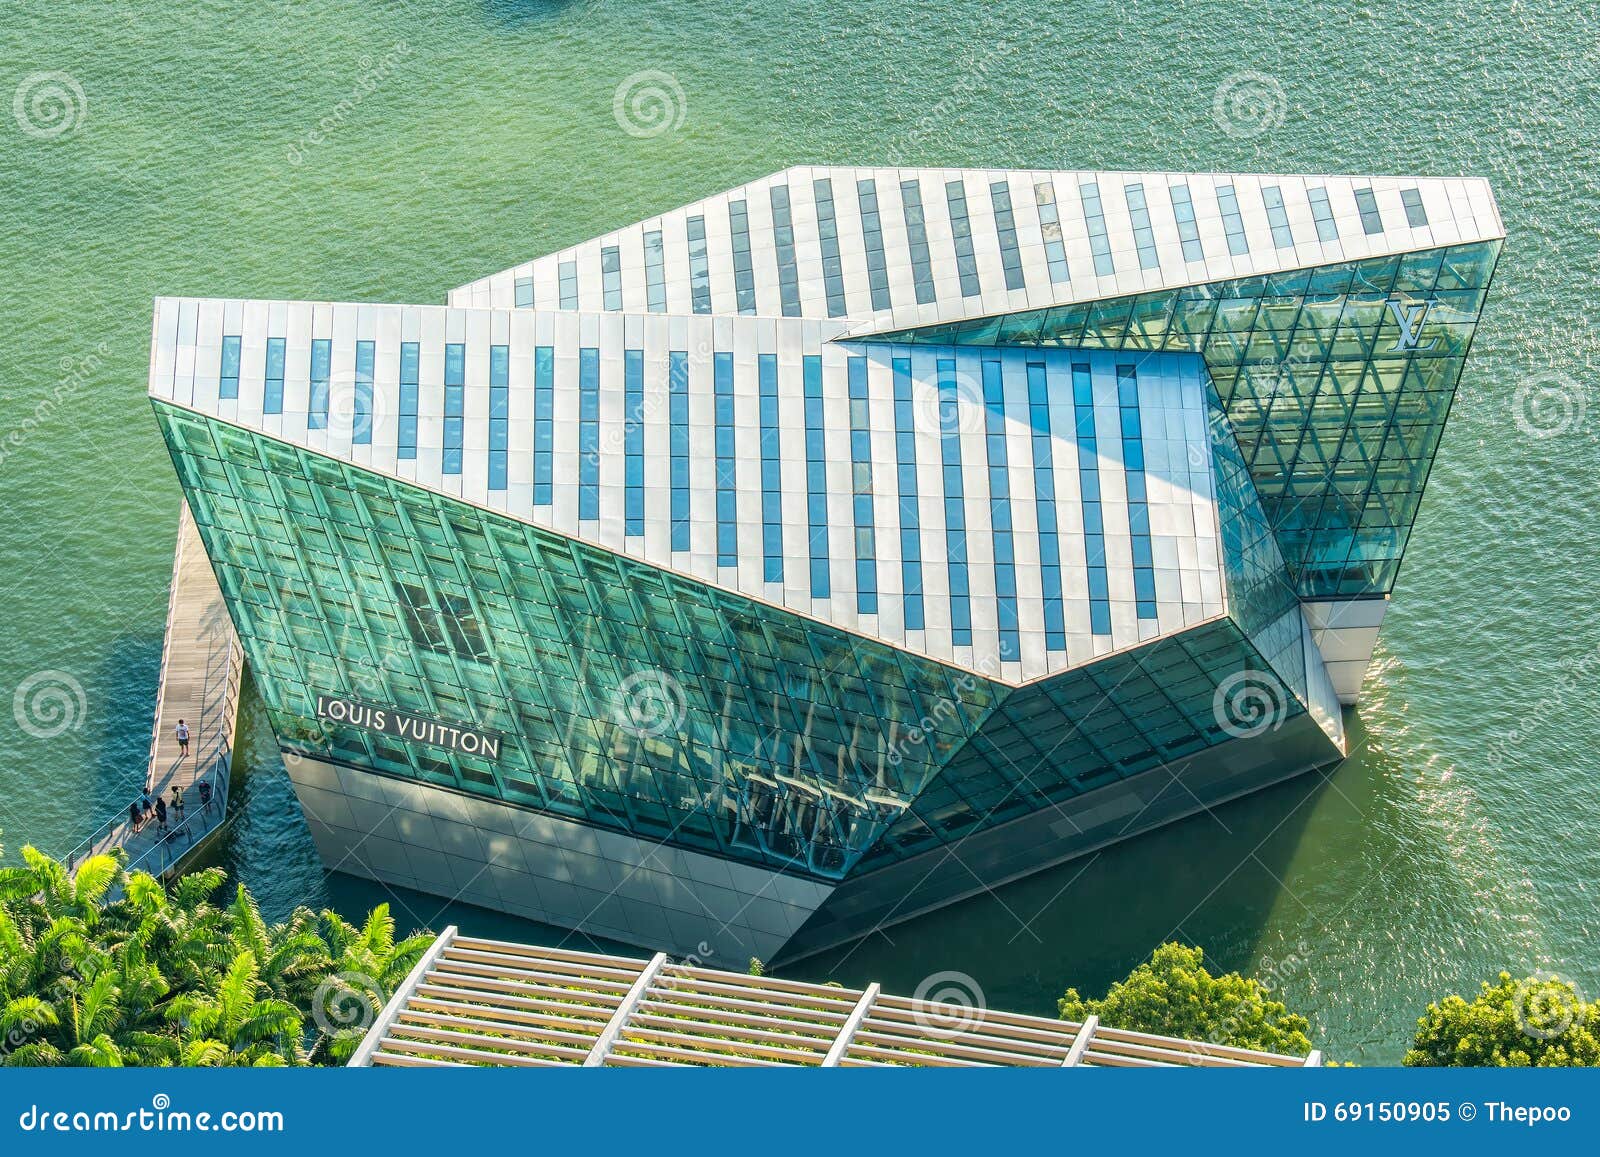 Louis Vuitton at Marina Bay, Singapore Editorial Image - Image of modern,  building: 69150905